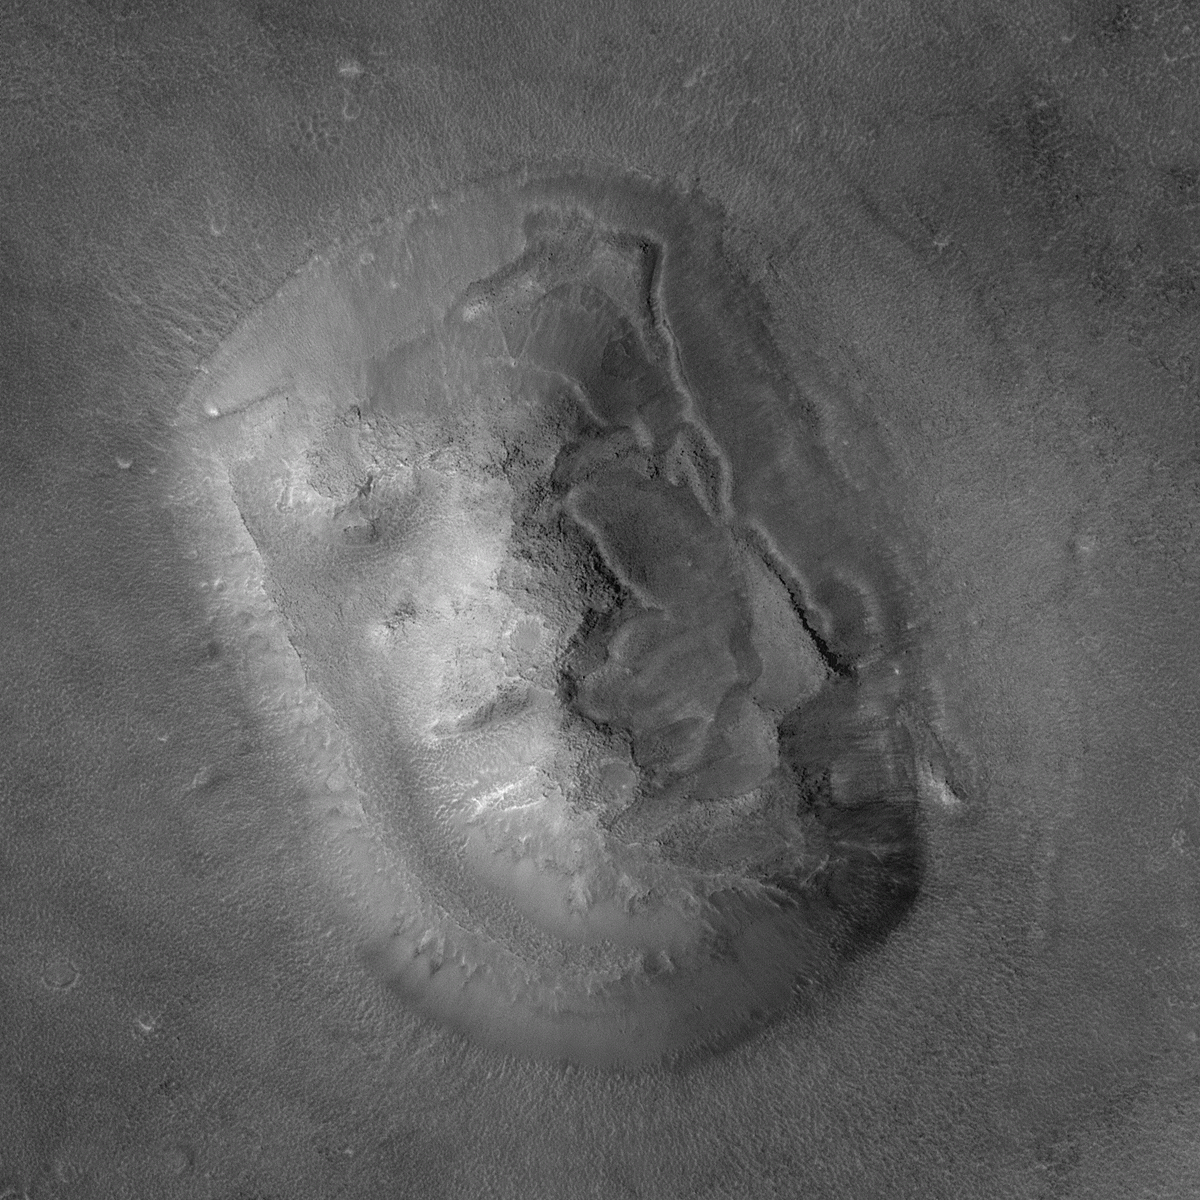 Face on Mars 2001